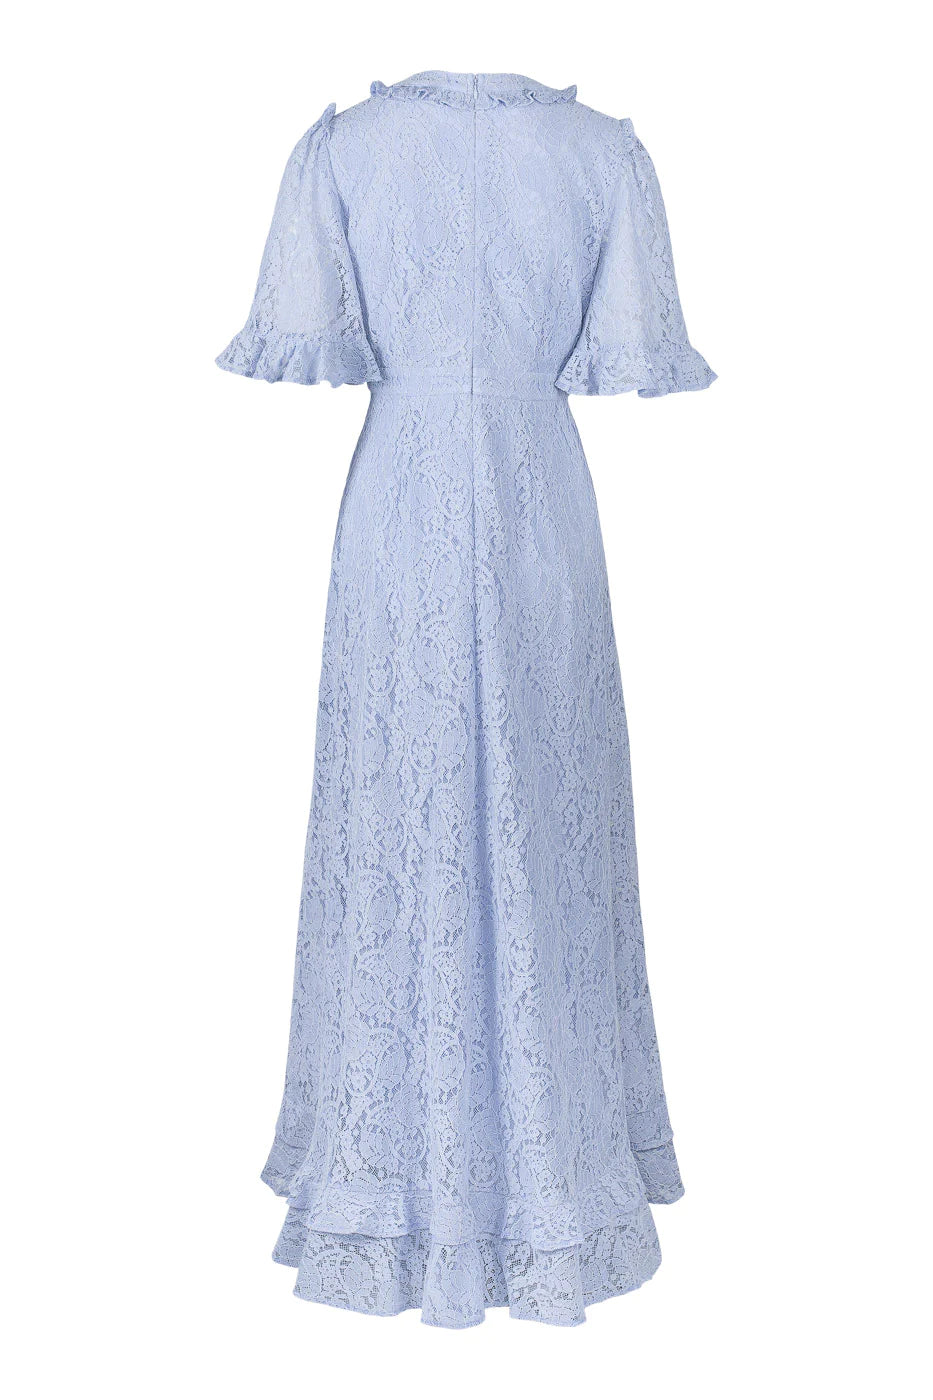 Catalina Maxi Dress - Light Blue Lace